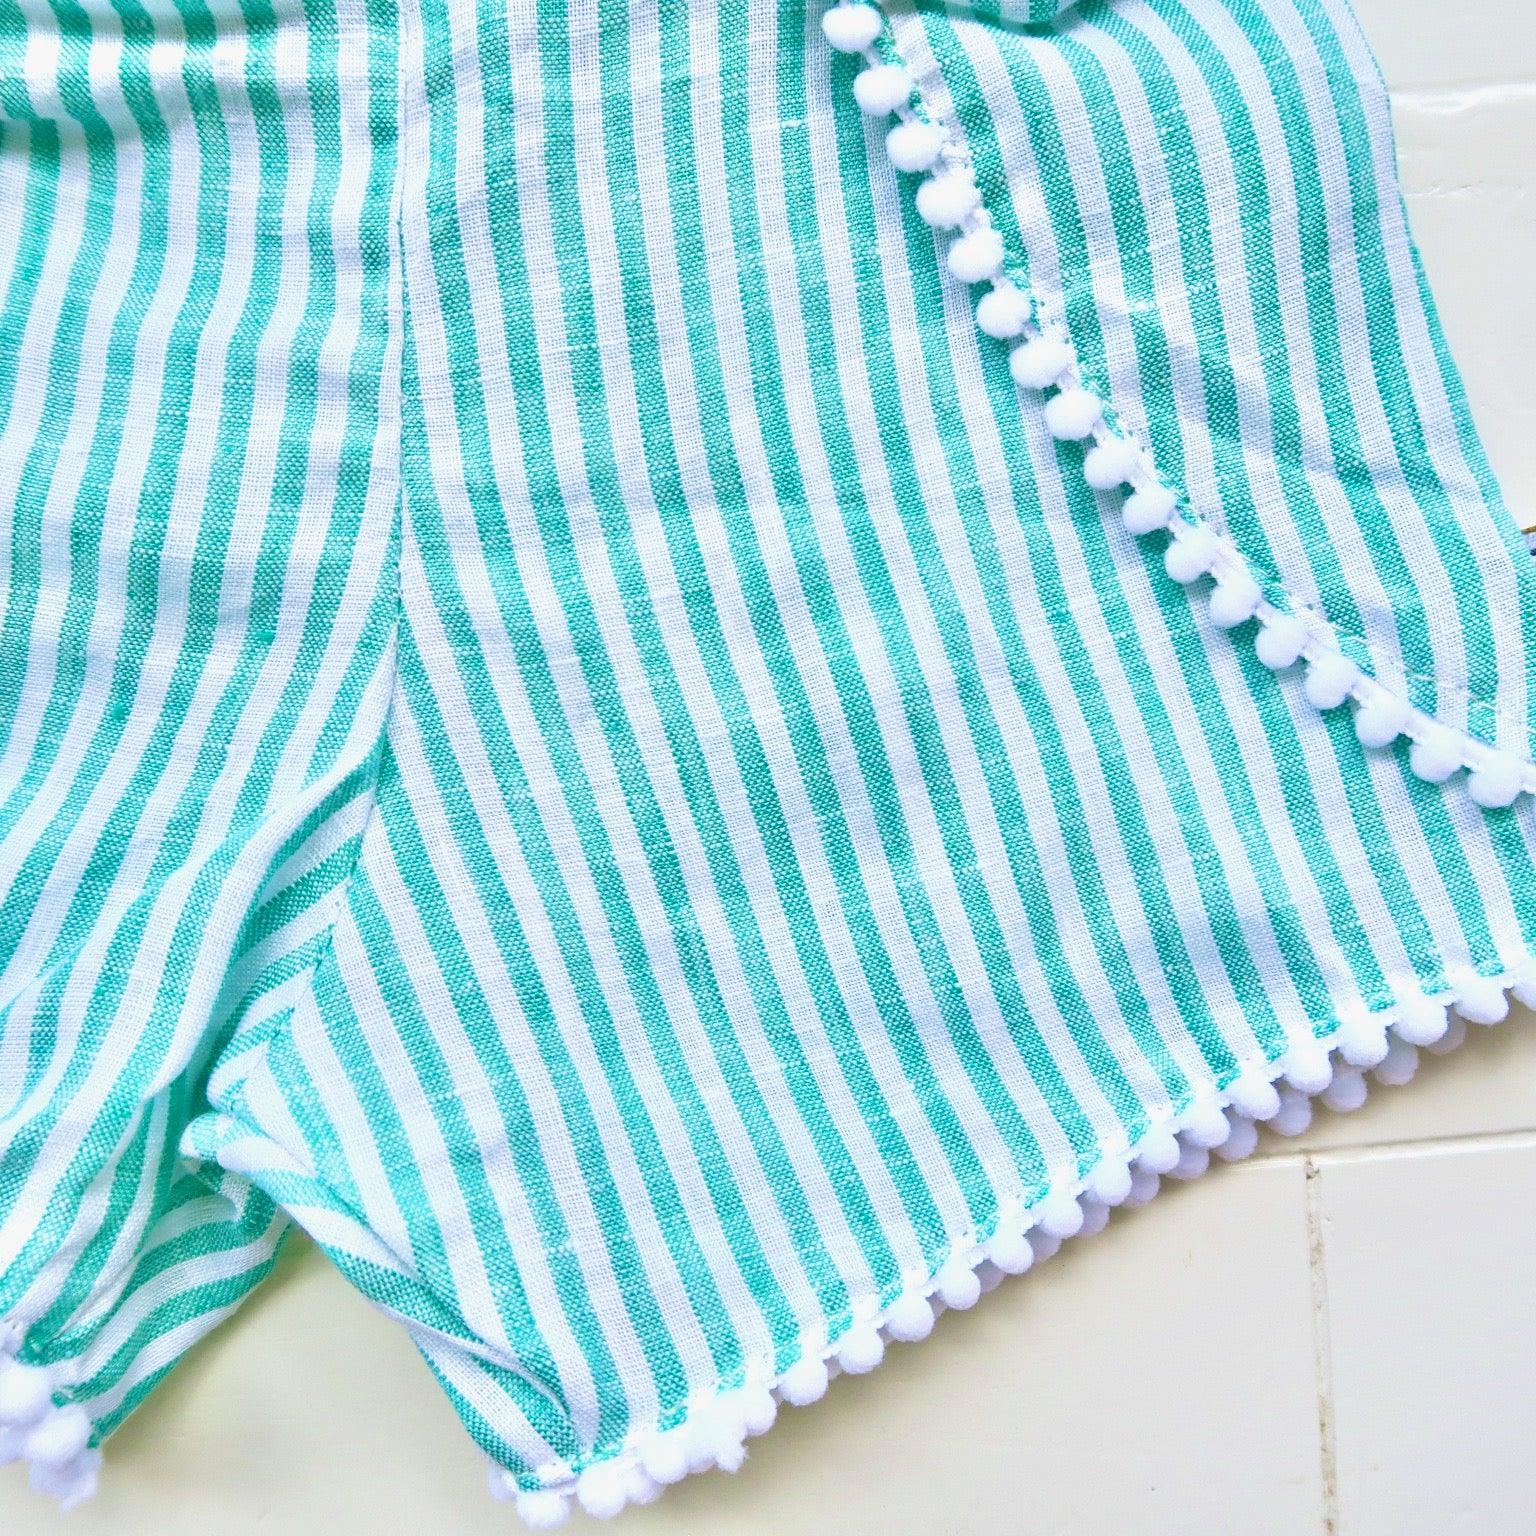 Pompom Shorts in Arcadia Green Linen - Lil' Tati